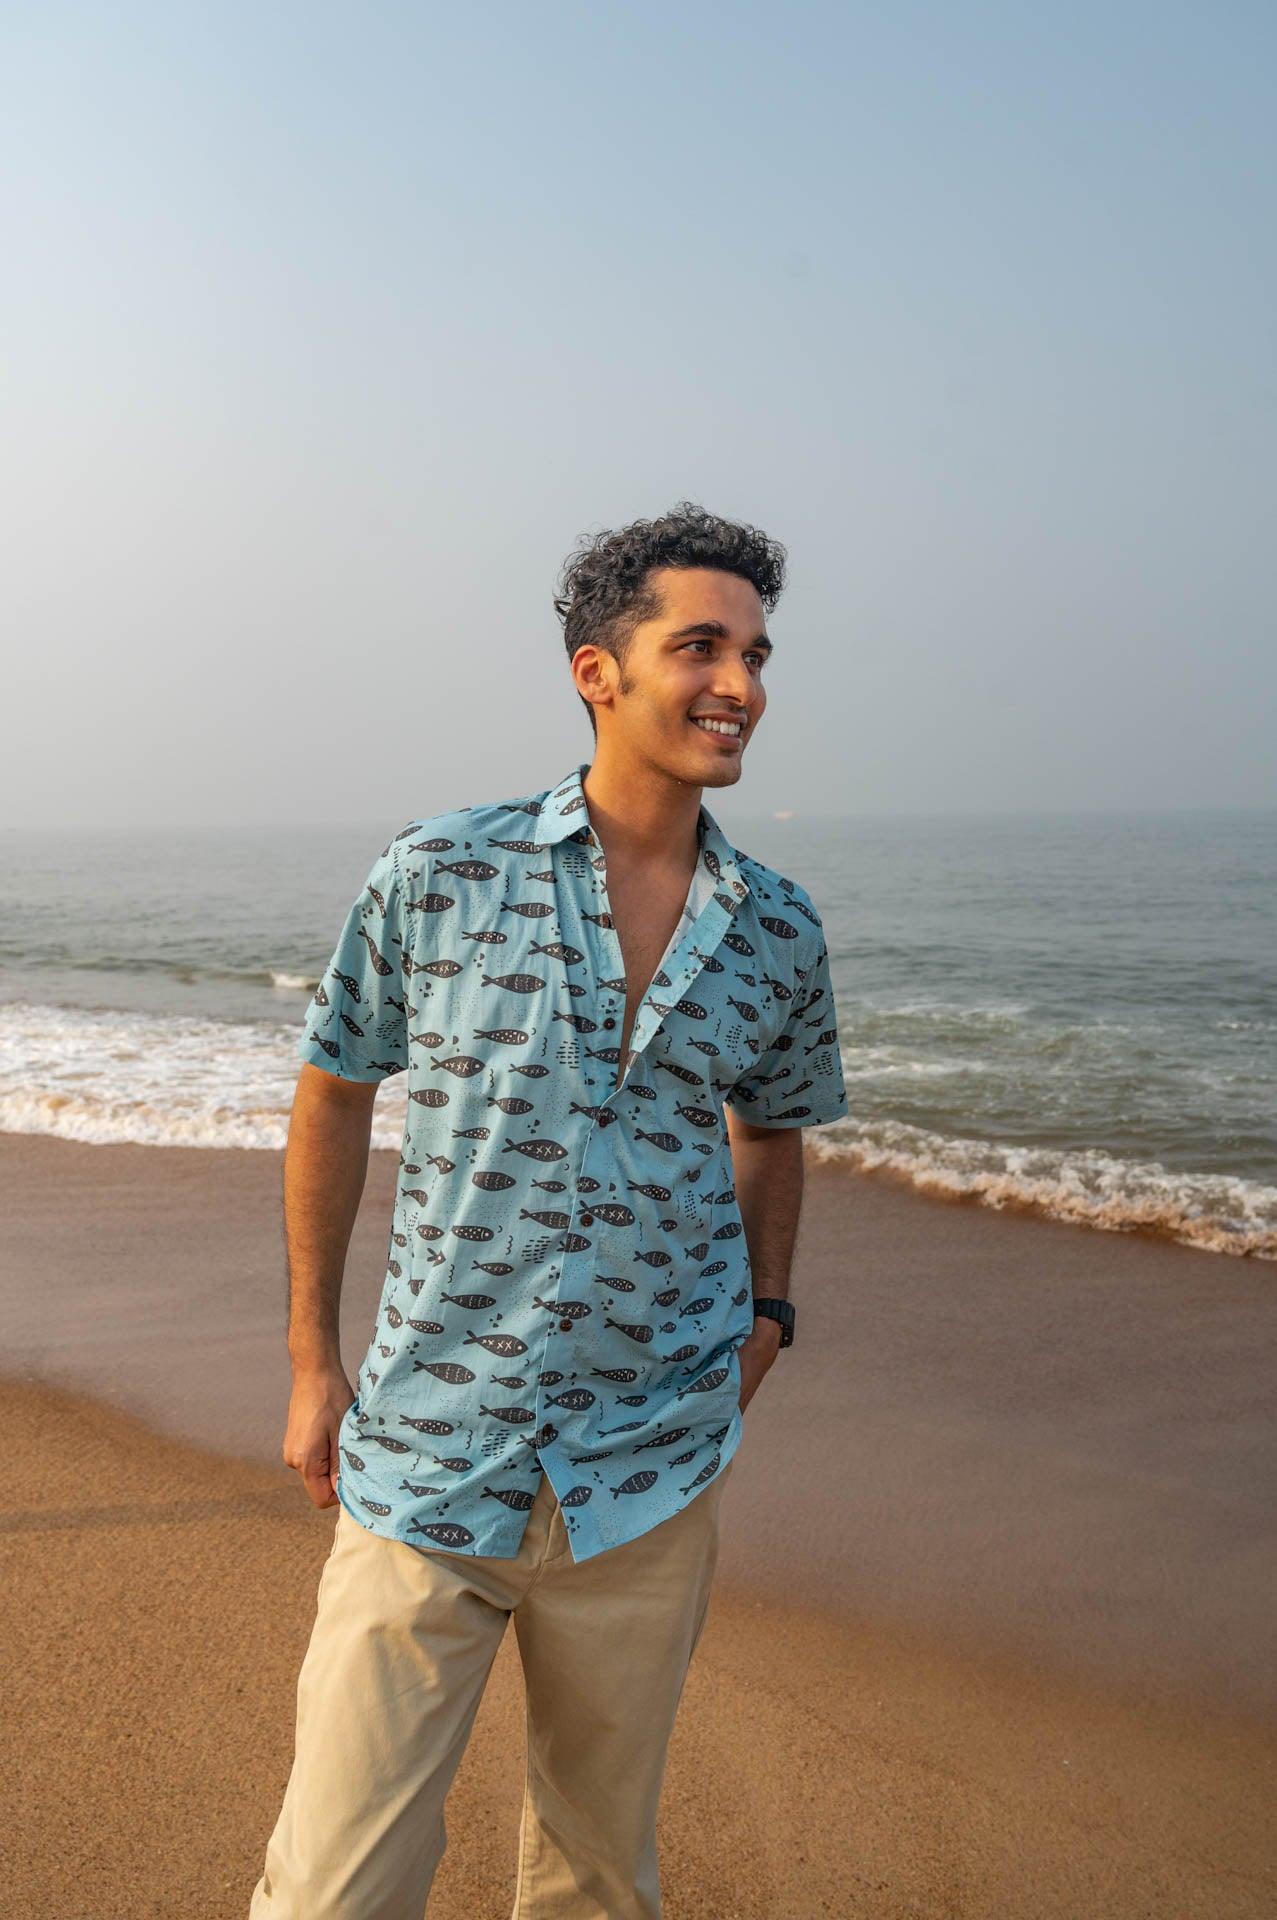 Fish print men's vacationwear shirt from Goa